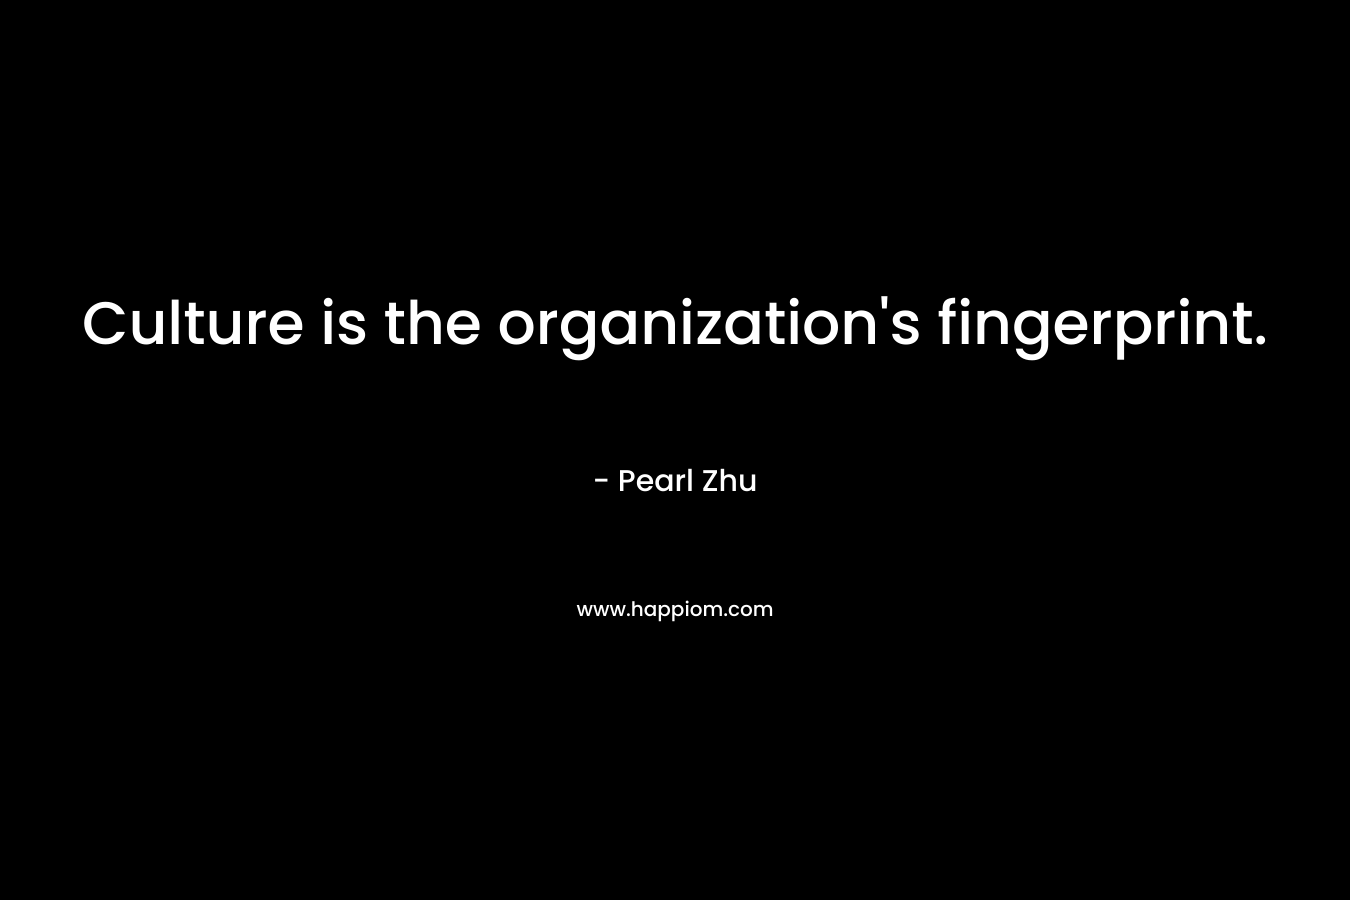 Culture is the organization’s fingerprint. – Pearl Zhu